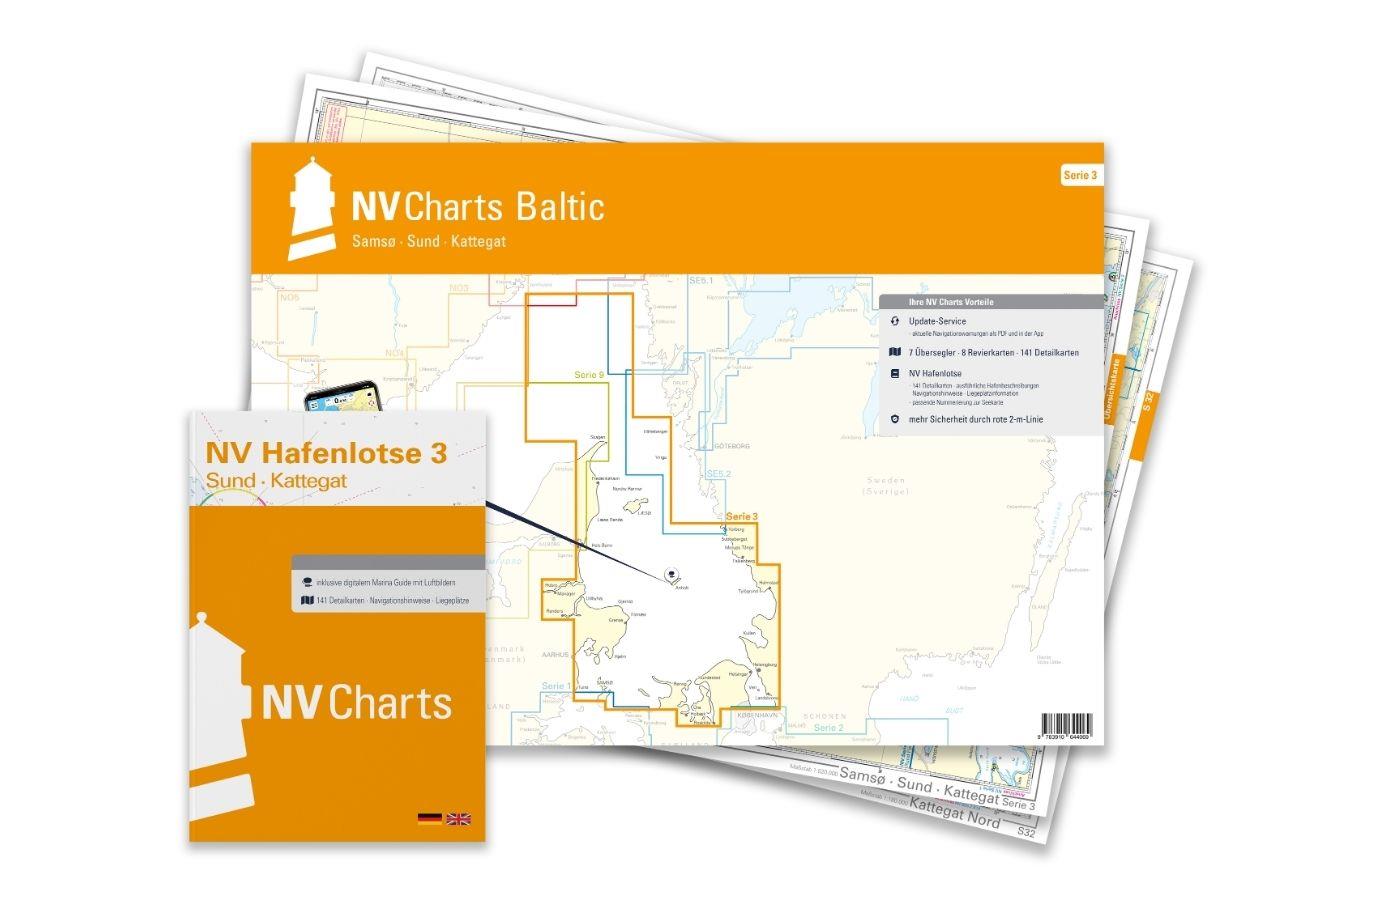 NV Charts Baltic Serie 3 Plano - East Denmark Single-Charts